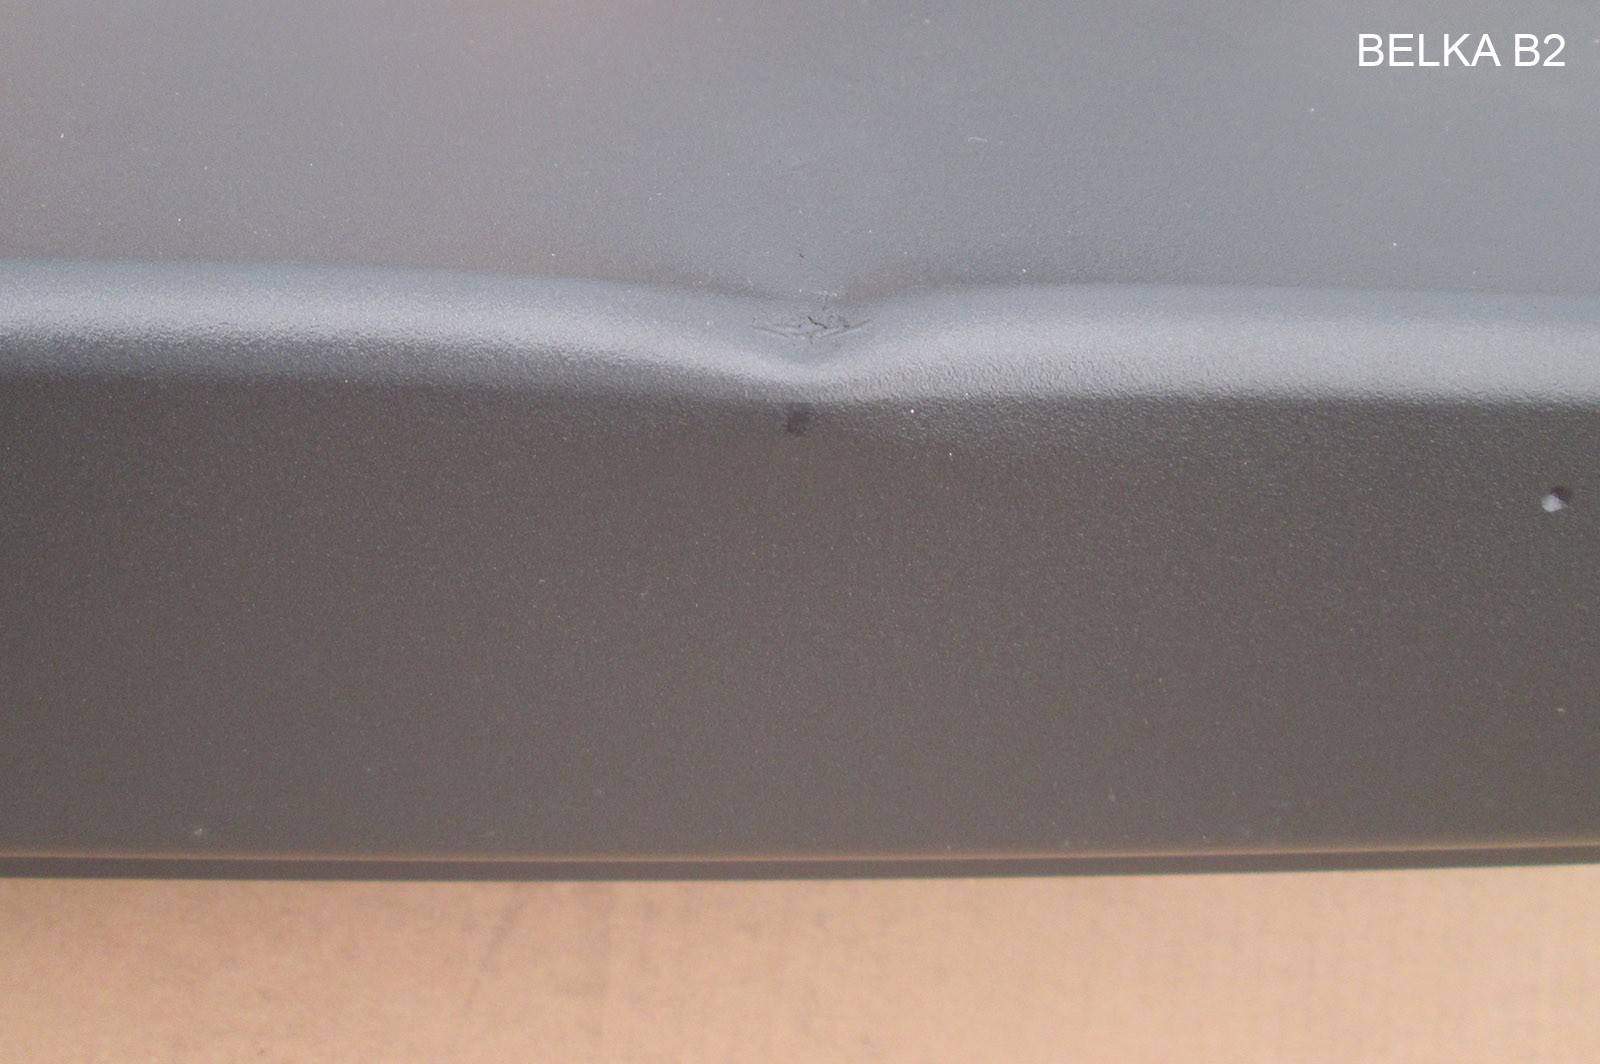 Zadaszenie pergola MARANZA 540cm grey OUTLET 71/wk